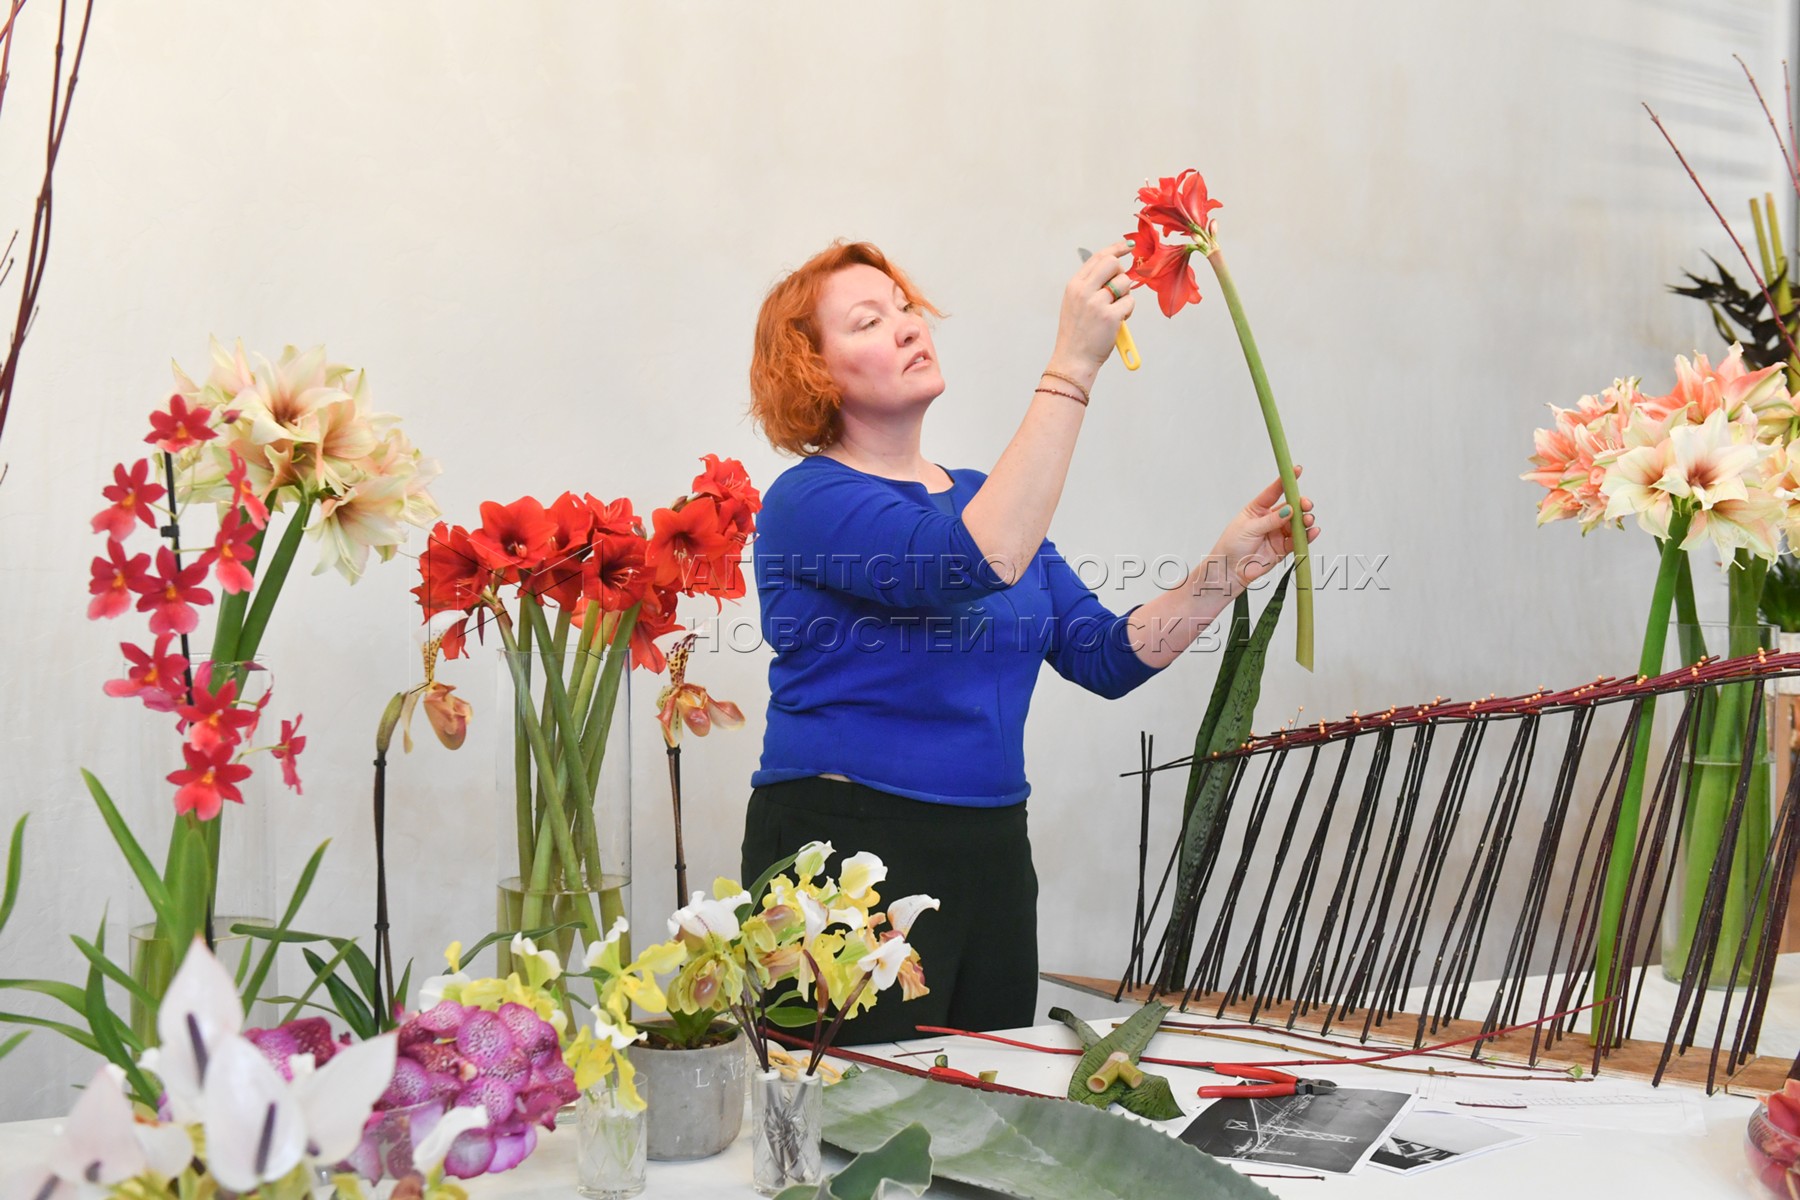 Флорист работа в москве вакансии